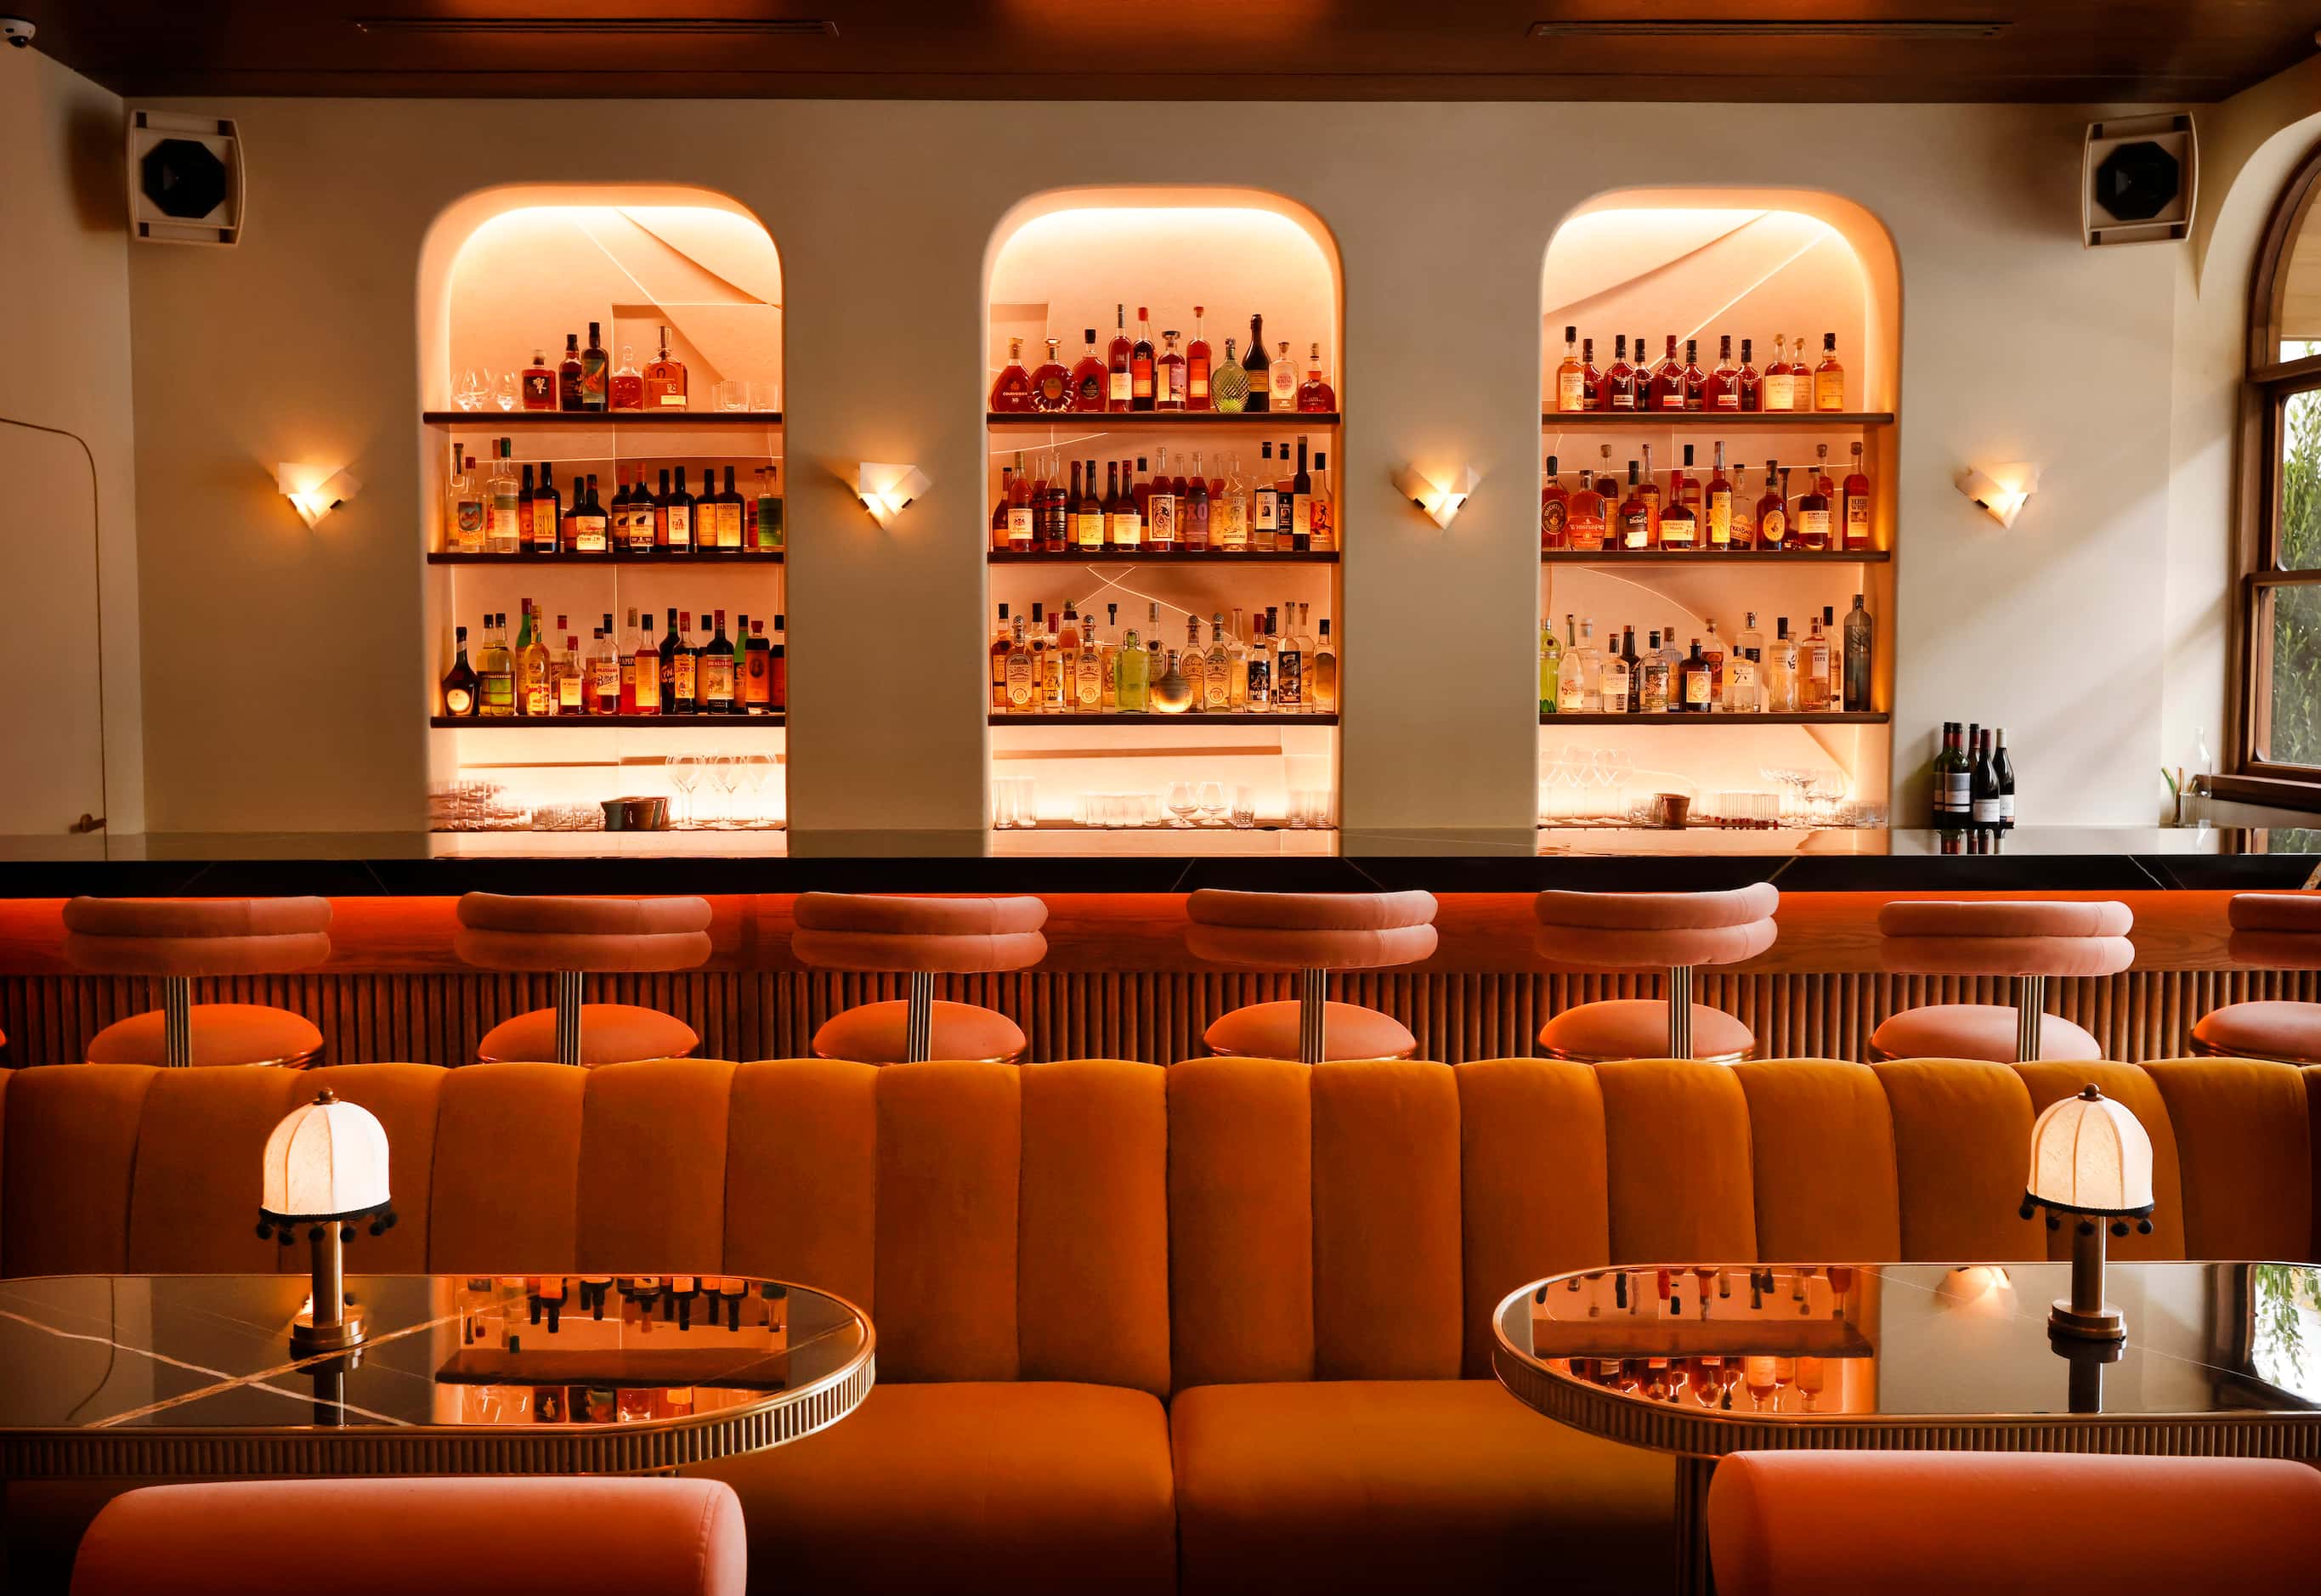 An interior view of Bar Colette in Dallas